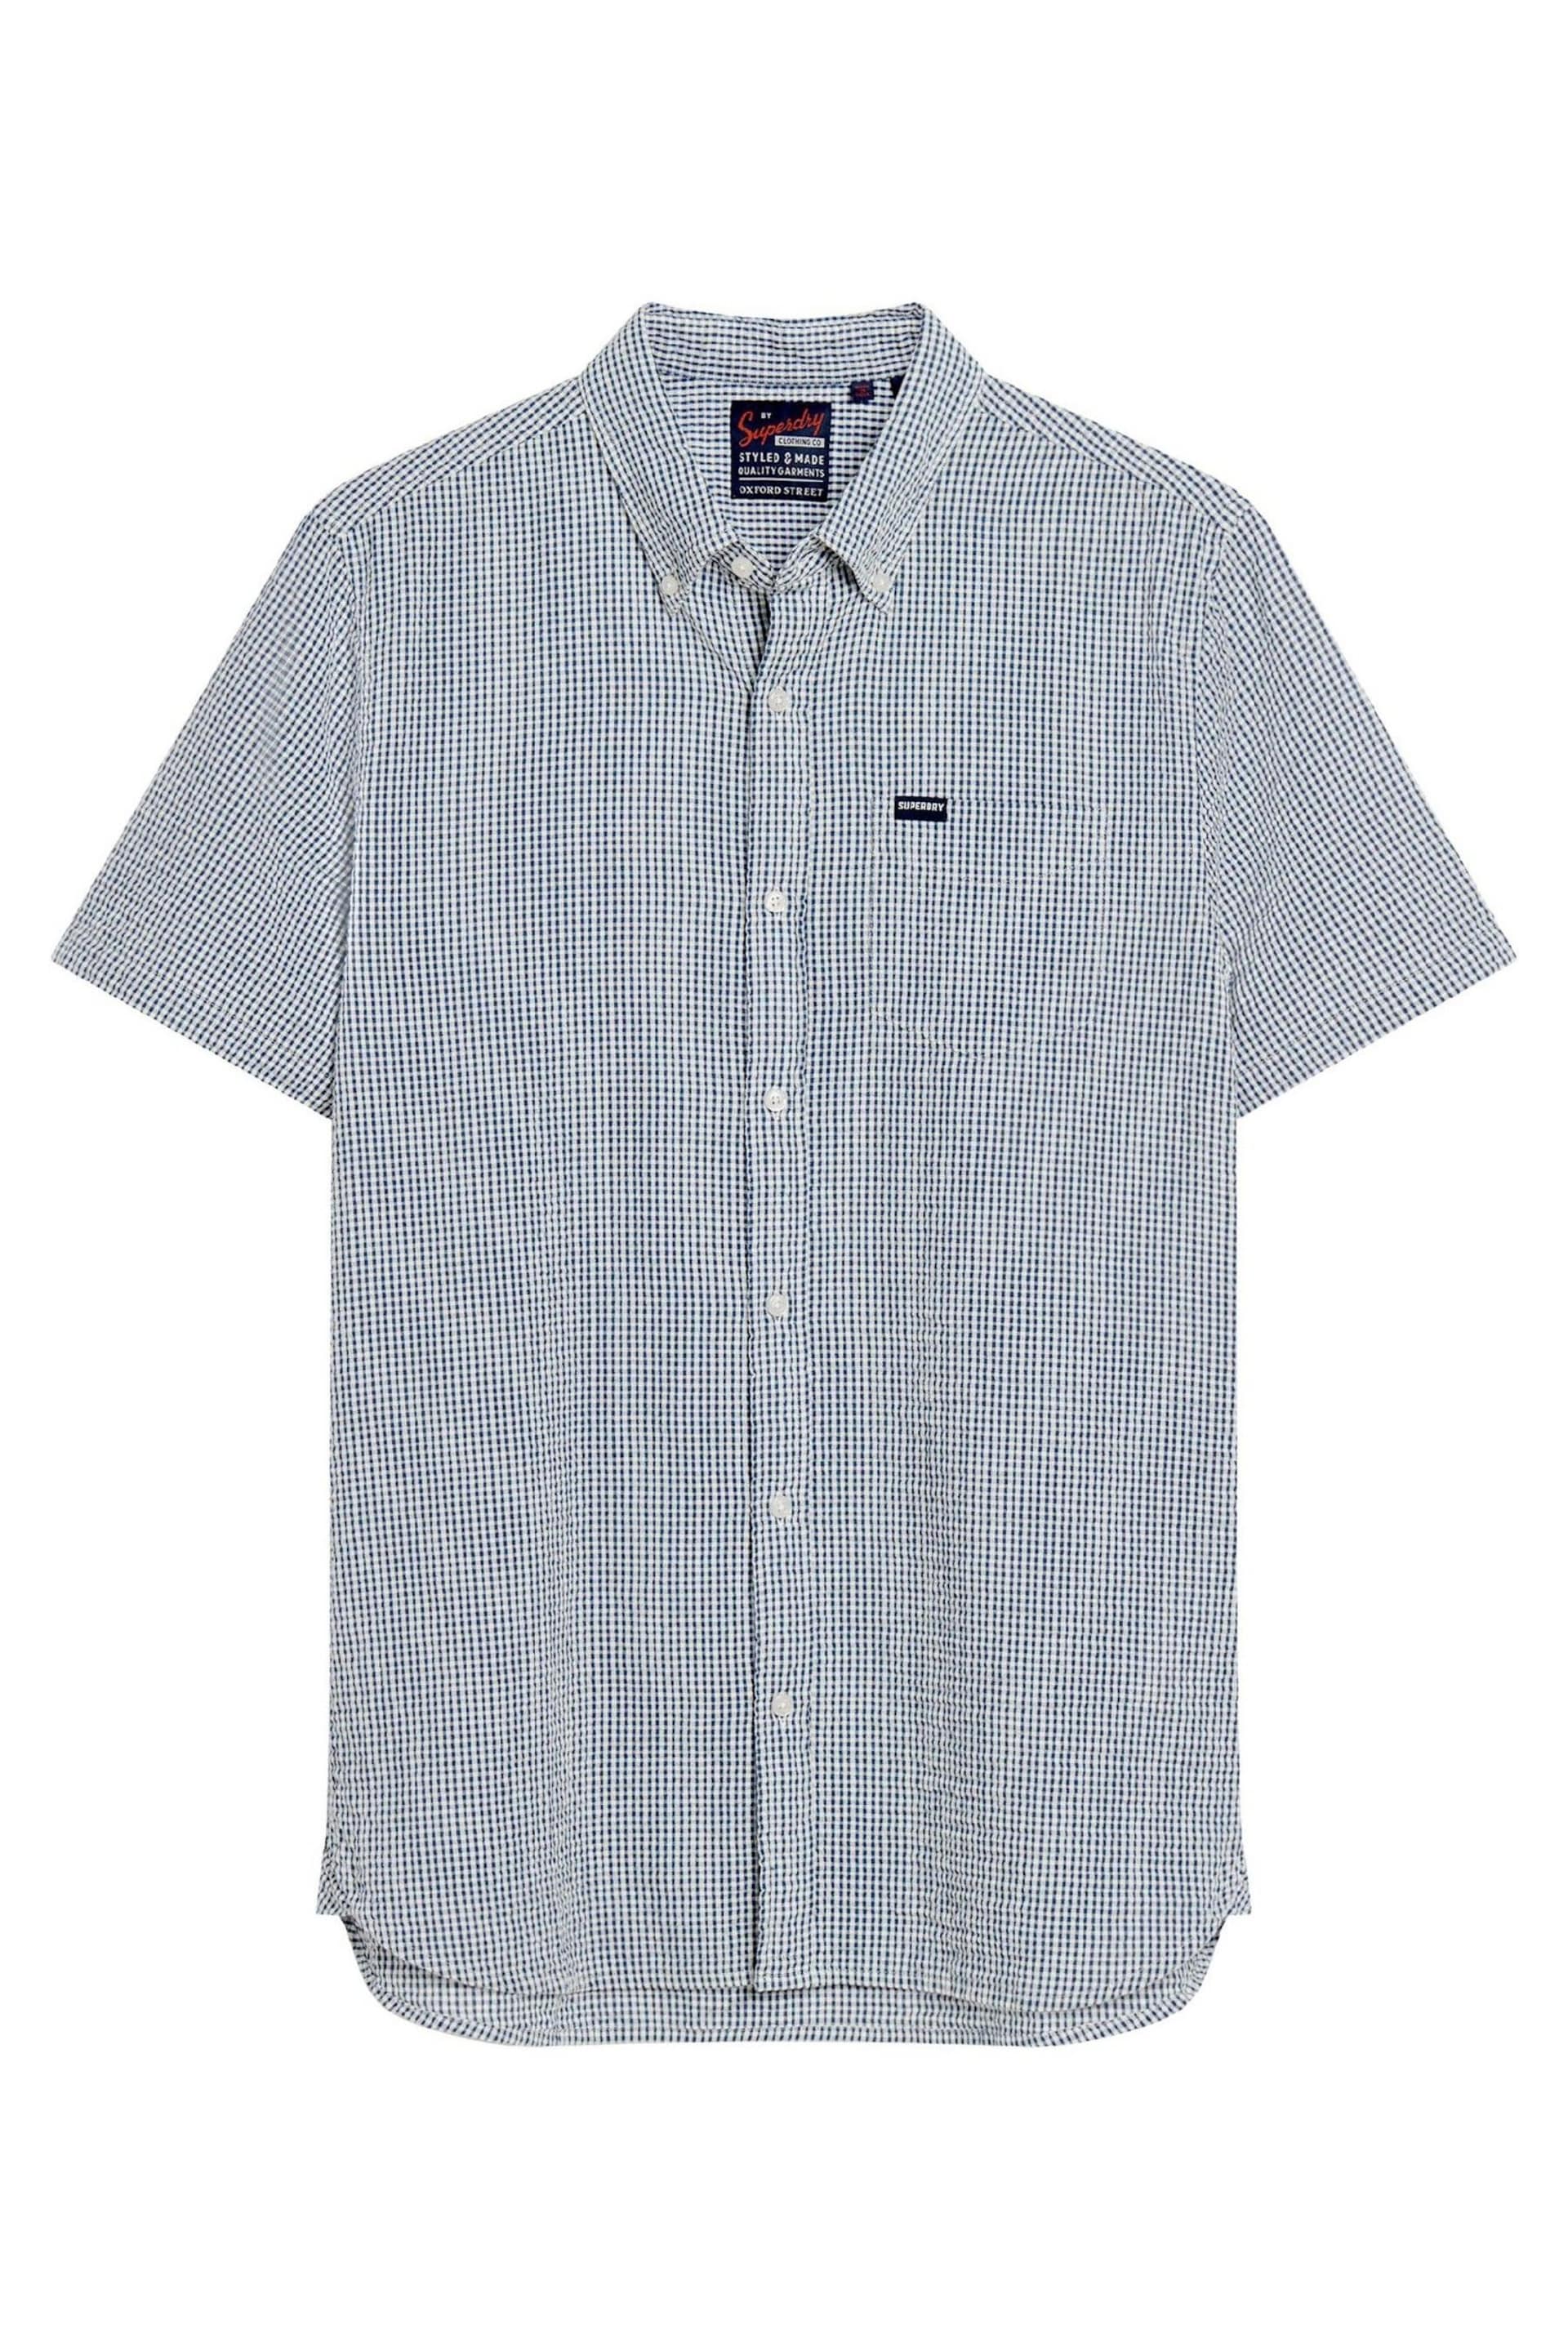 Superdry Blue Seersucker Short Sleeved Shirt - Image 4 of 6